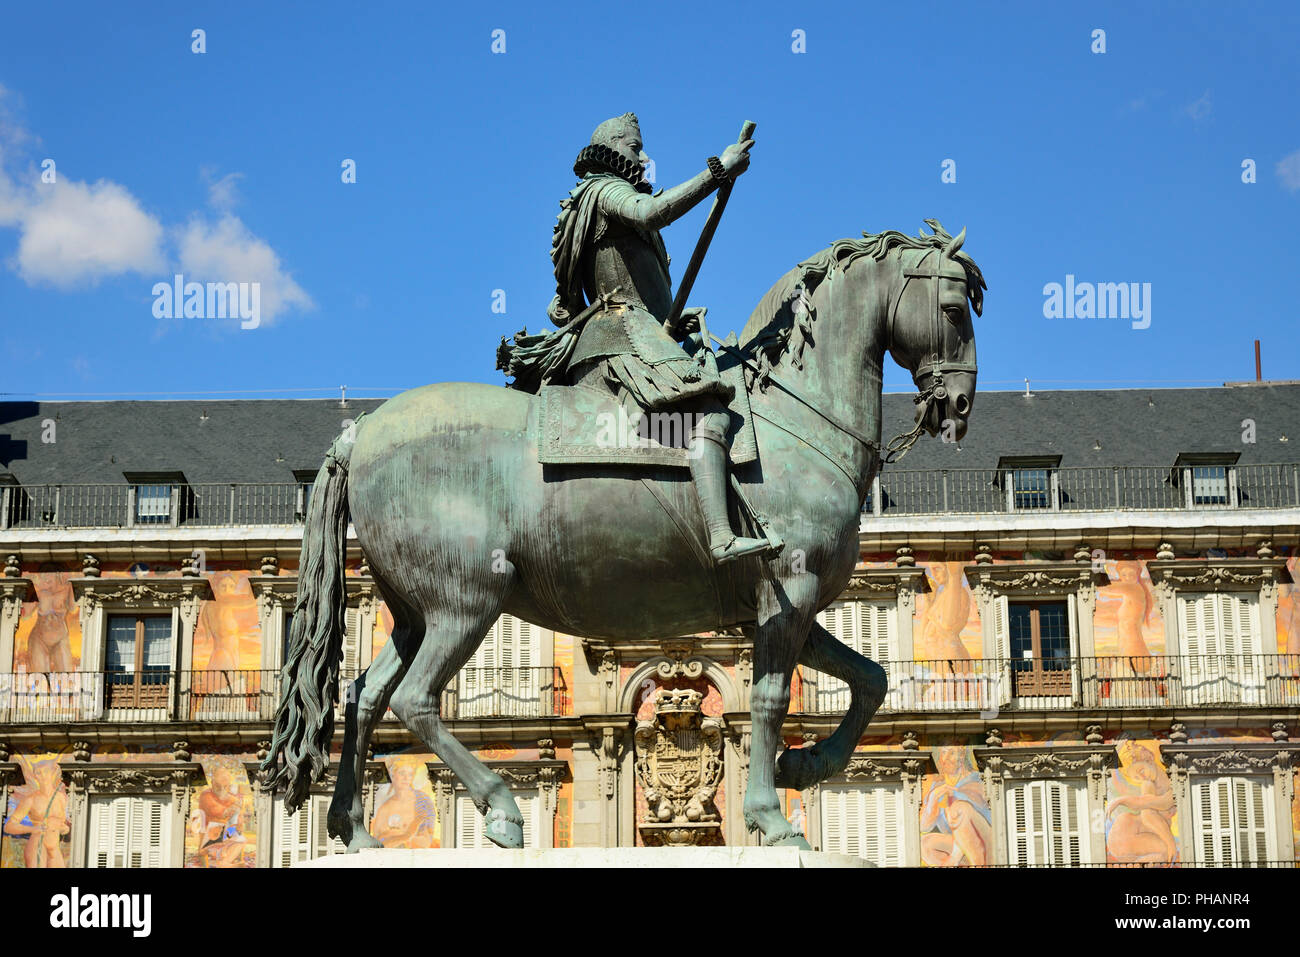 La statue équestre du roi Felipe III (Philippe III d'Espagne), la Plaza Mayor, Madrid. Espagne Banque D'Images